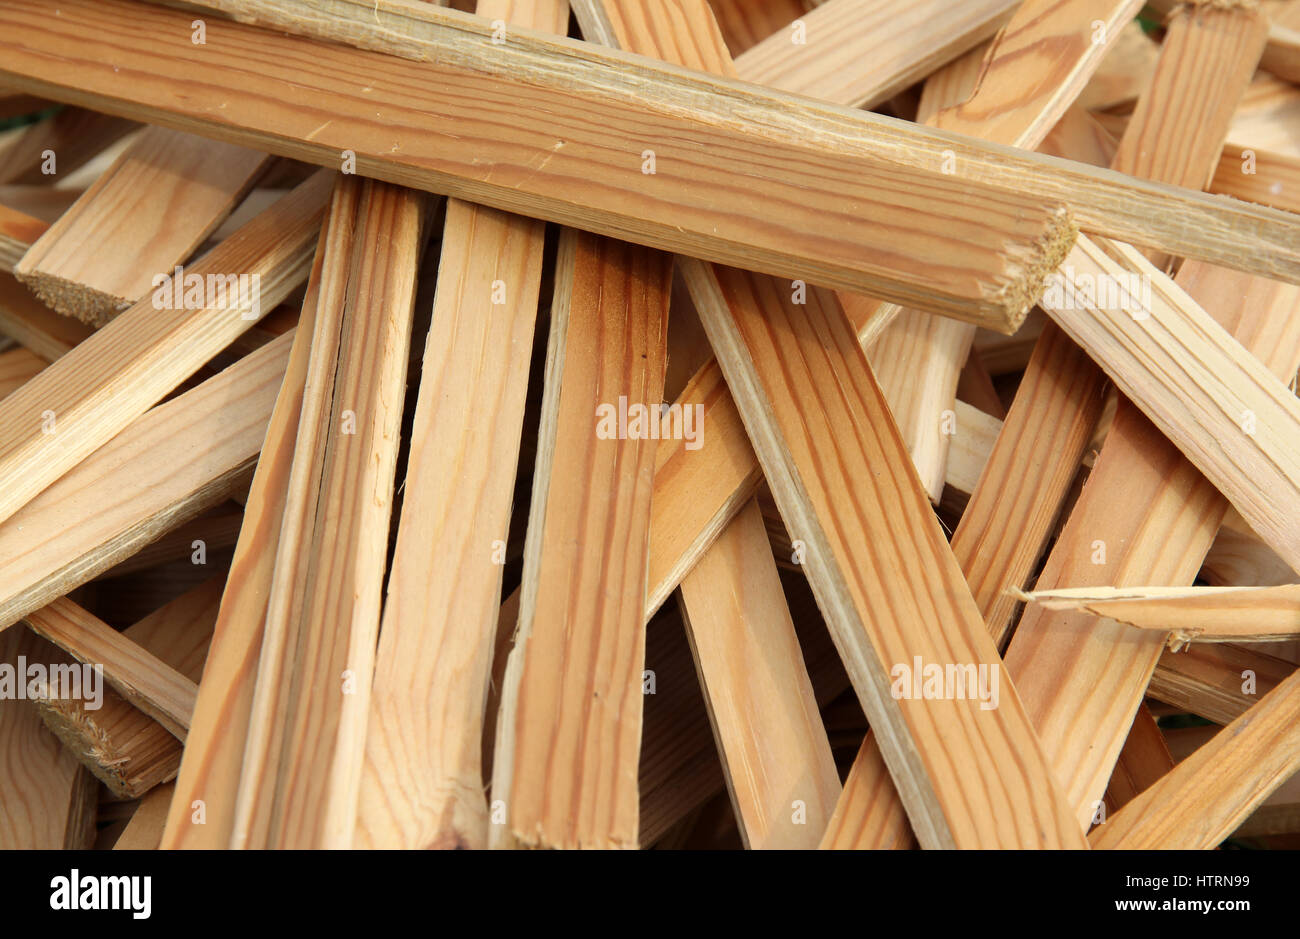 pine wood kindling Stock Photo